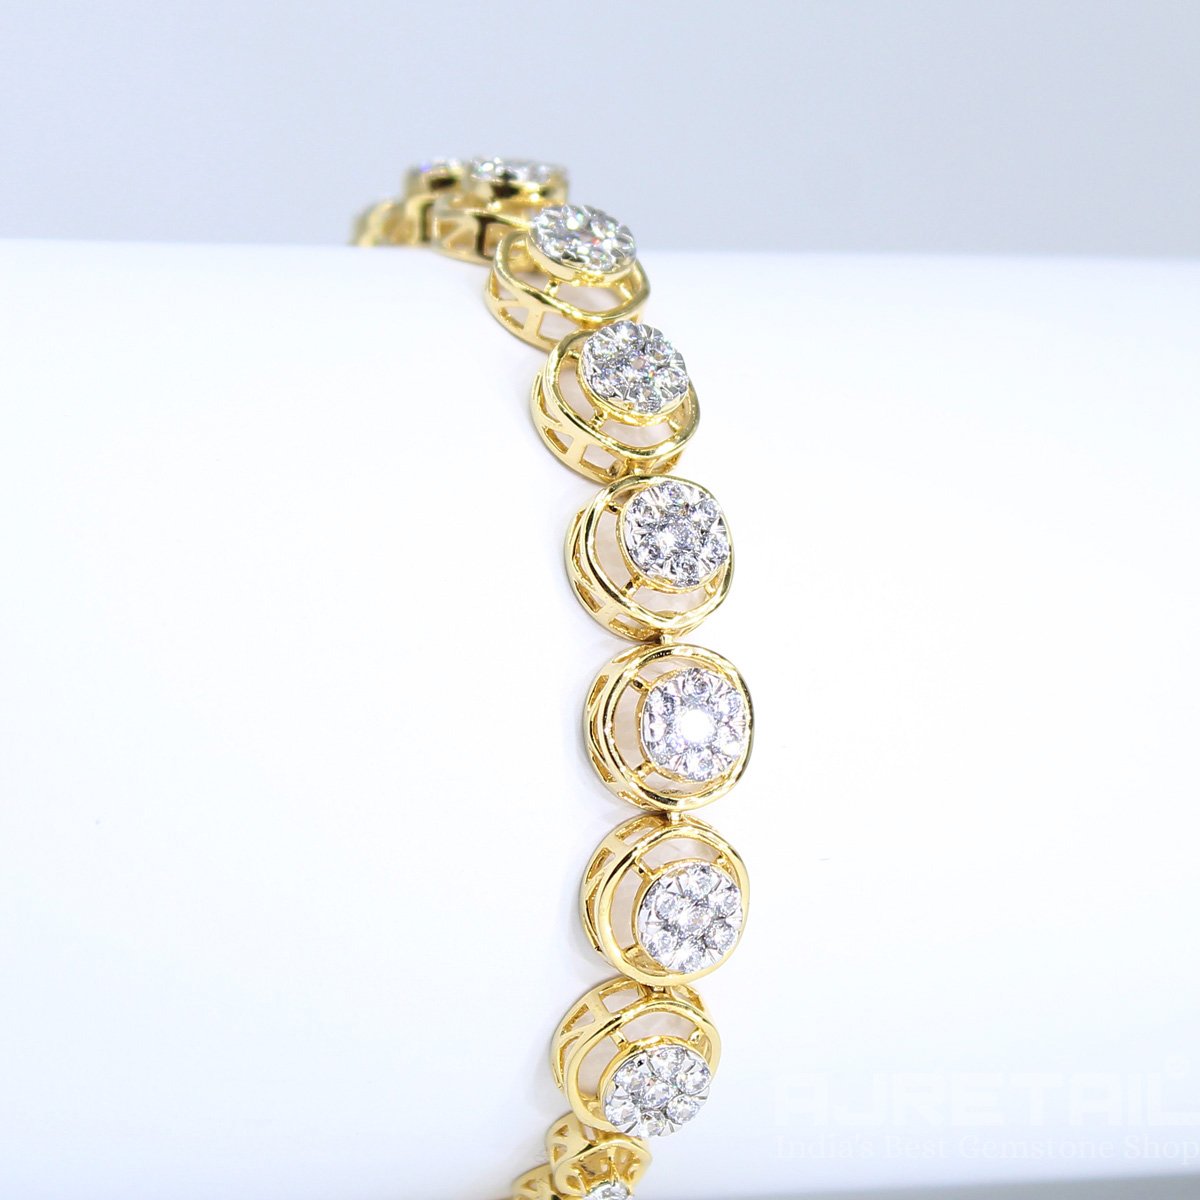 Buy 18K Gold Bracelets From 1000 Designs at Best Price Online